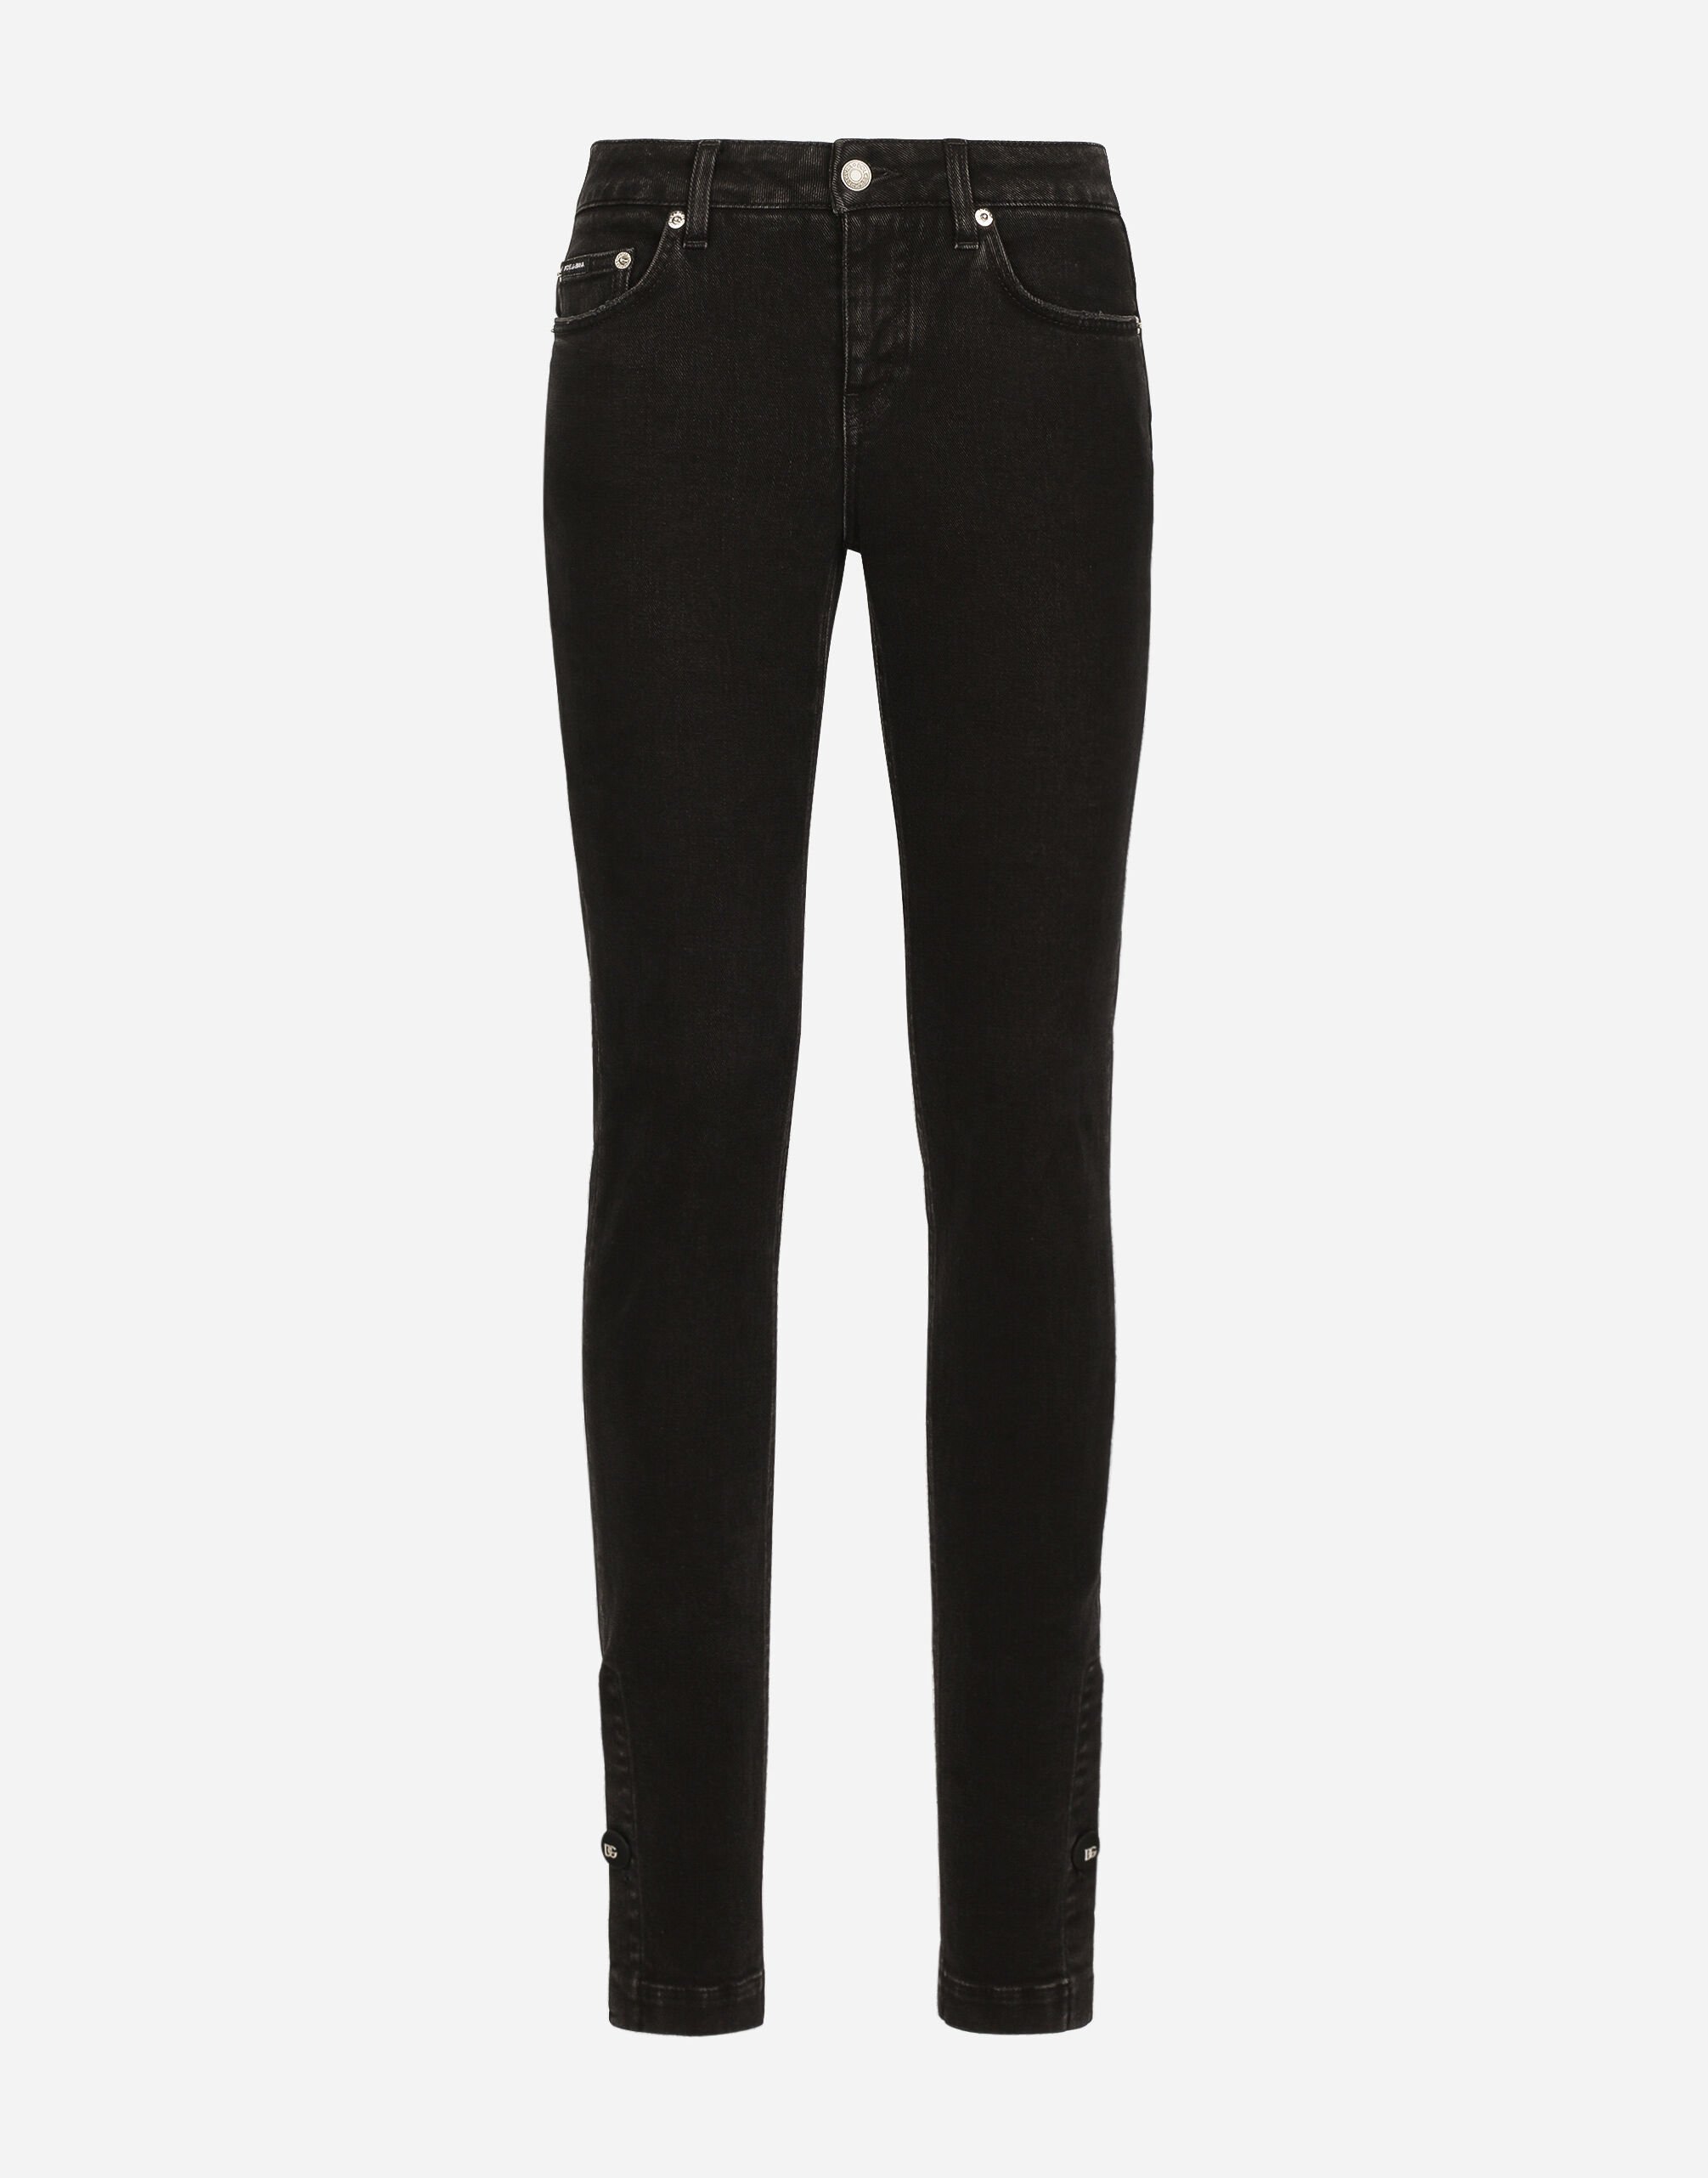 Dolce Gabbana Womens Jeans 👖 Pants Trousers W26/L40 Very Good